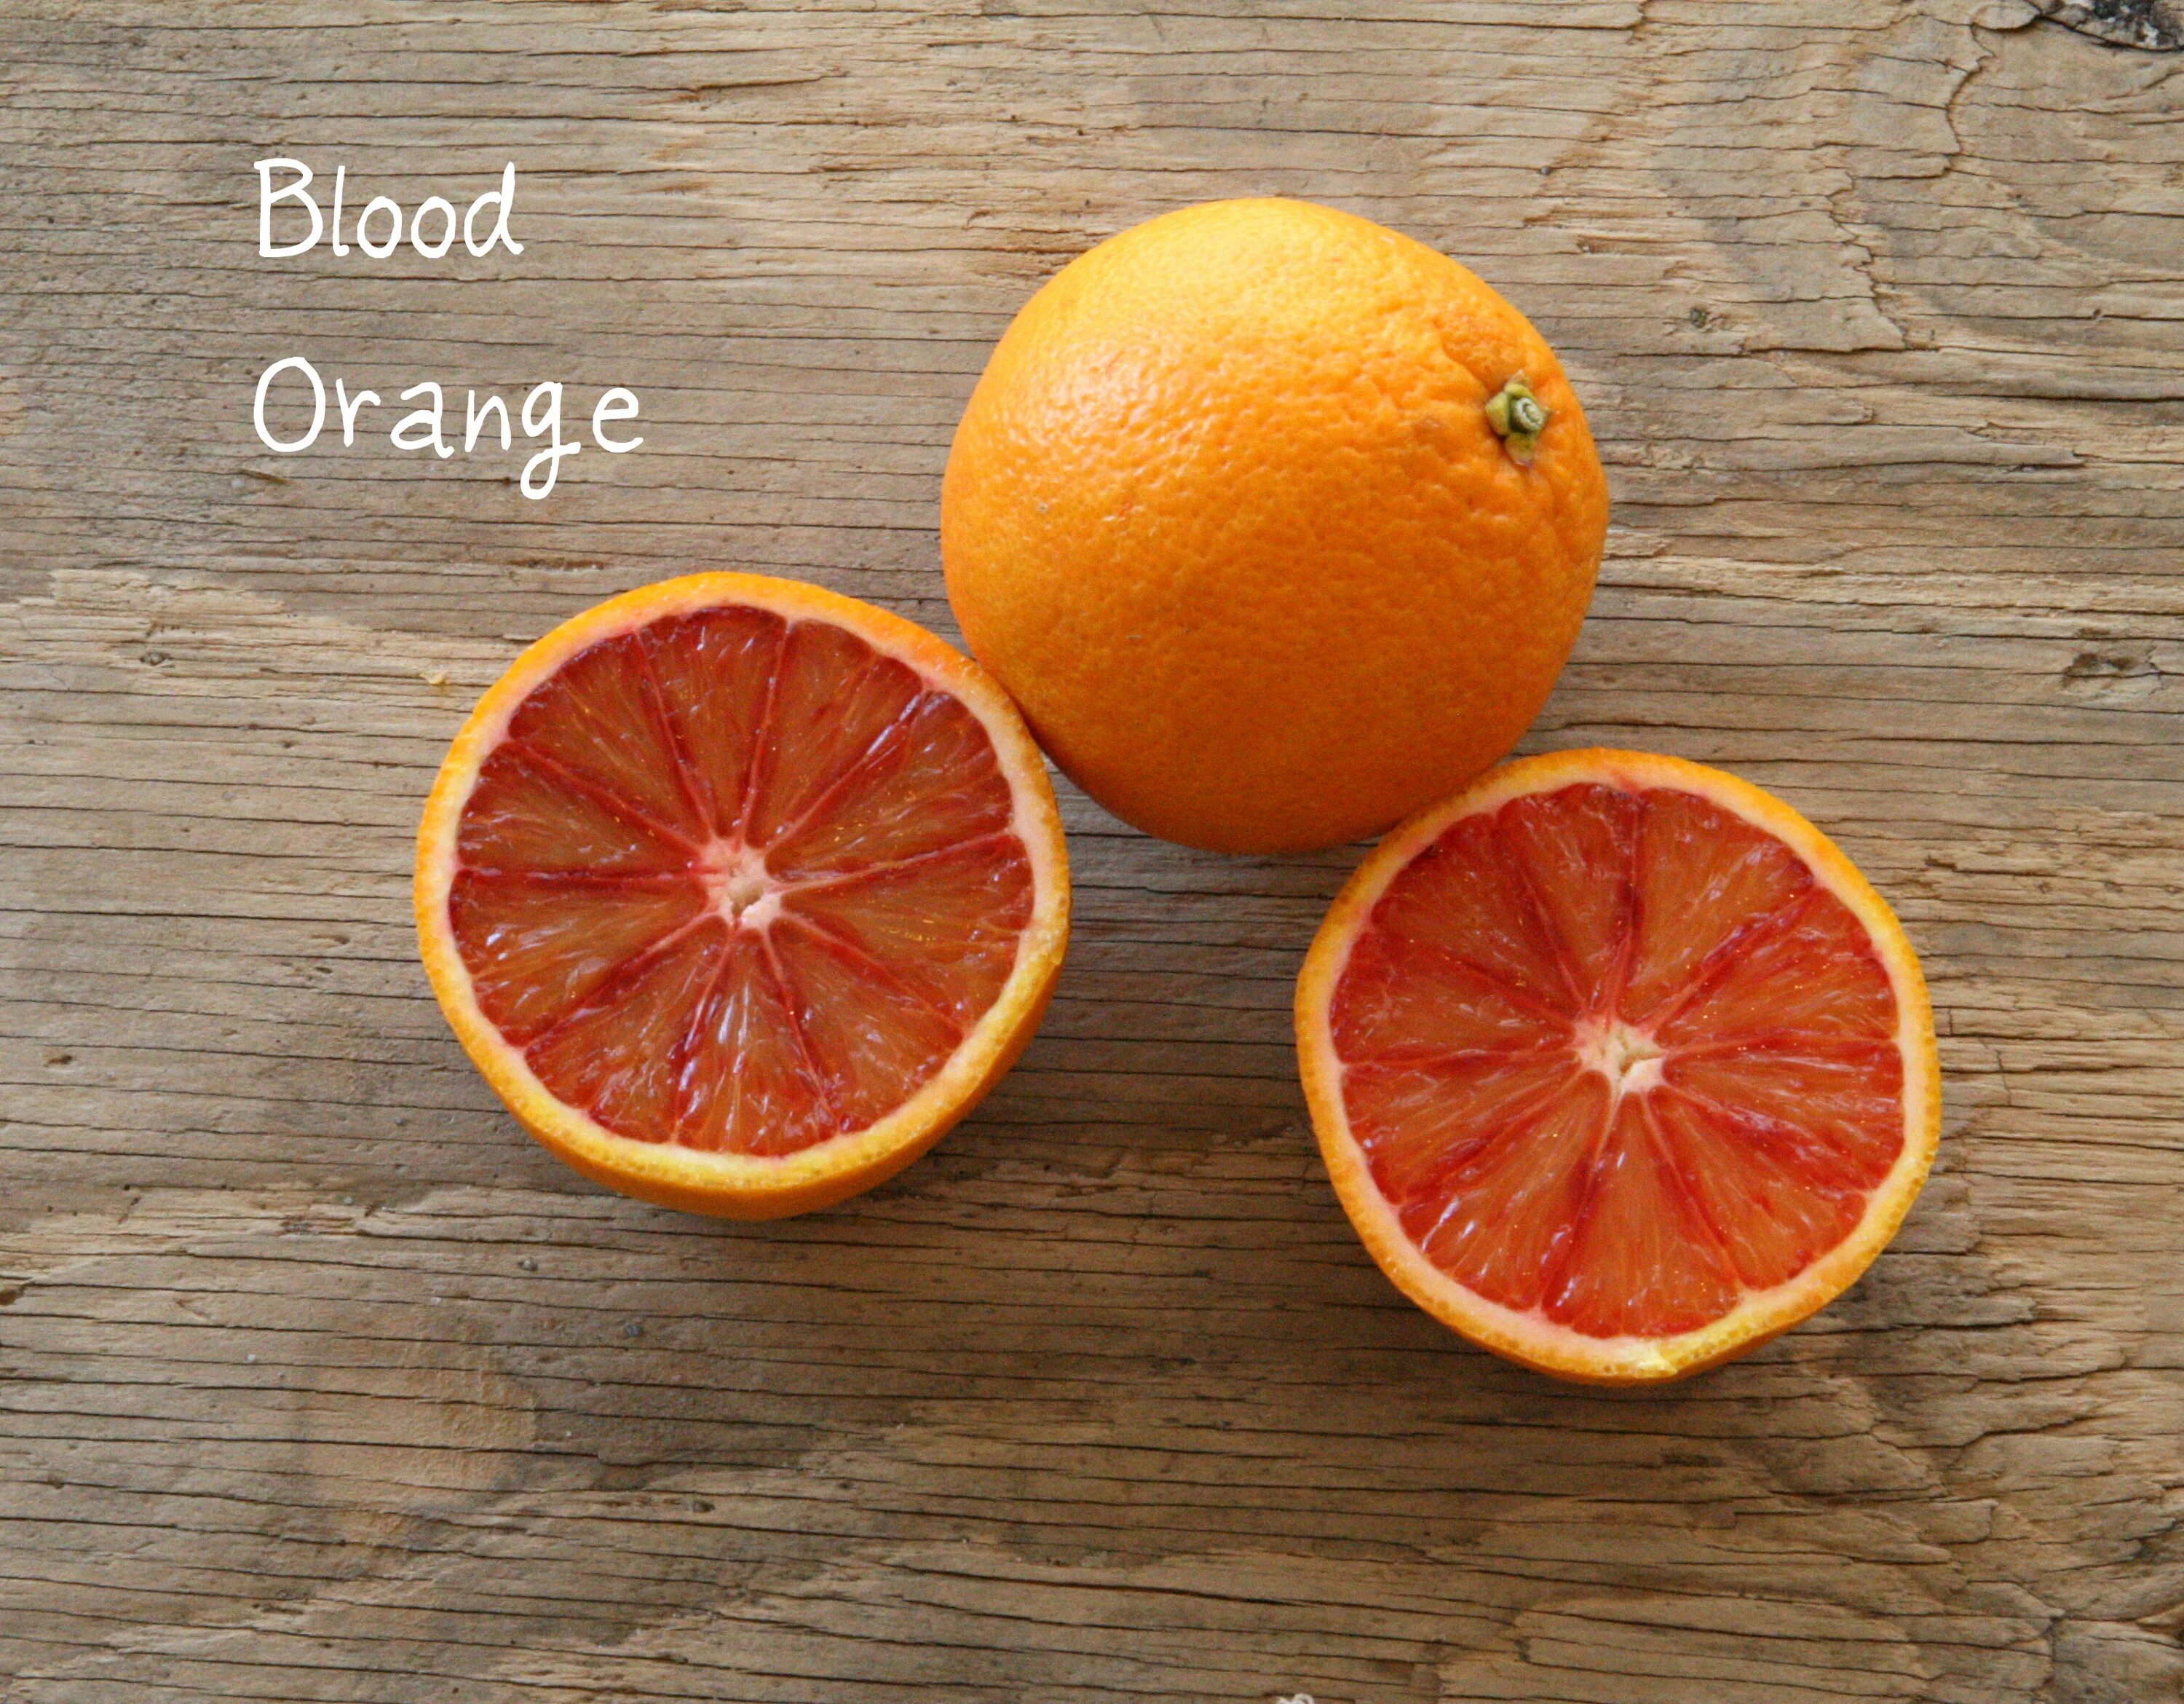 They like oranges. Апельсин Smith Red Blood Orange. Pink Orange апельсин. Калифорния апельсины. A Orange или an Orange.